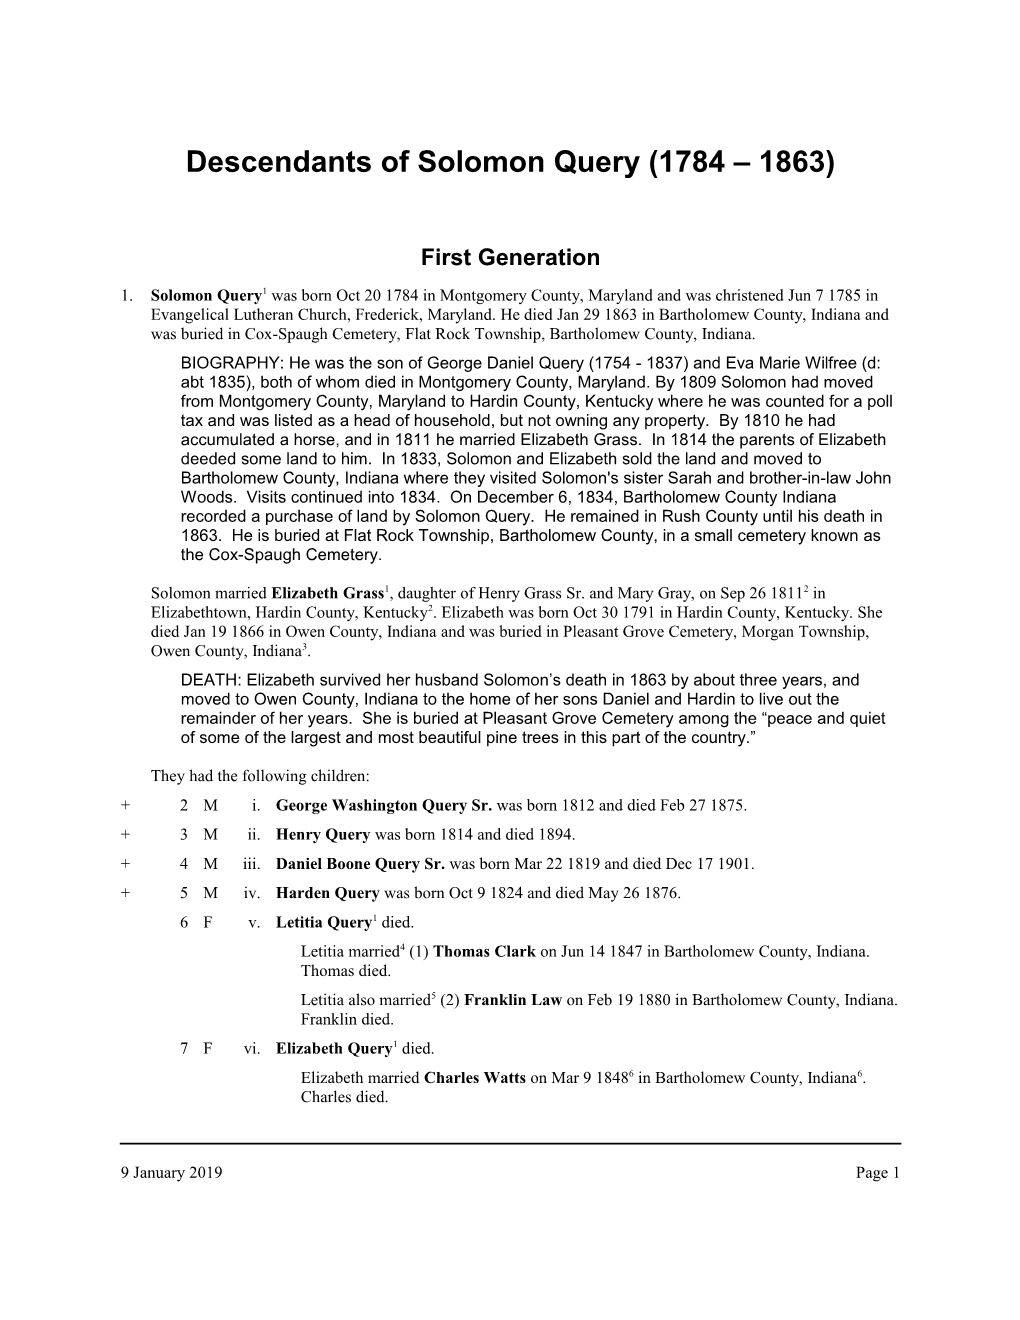 Descendants of Solomon Query (1784 1863)